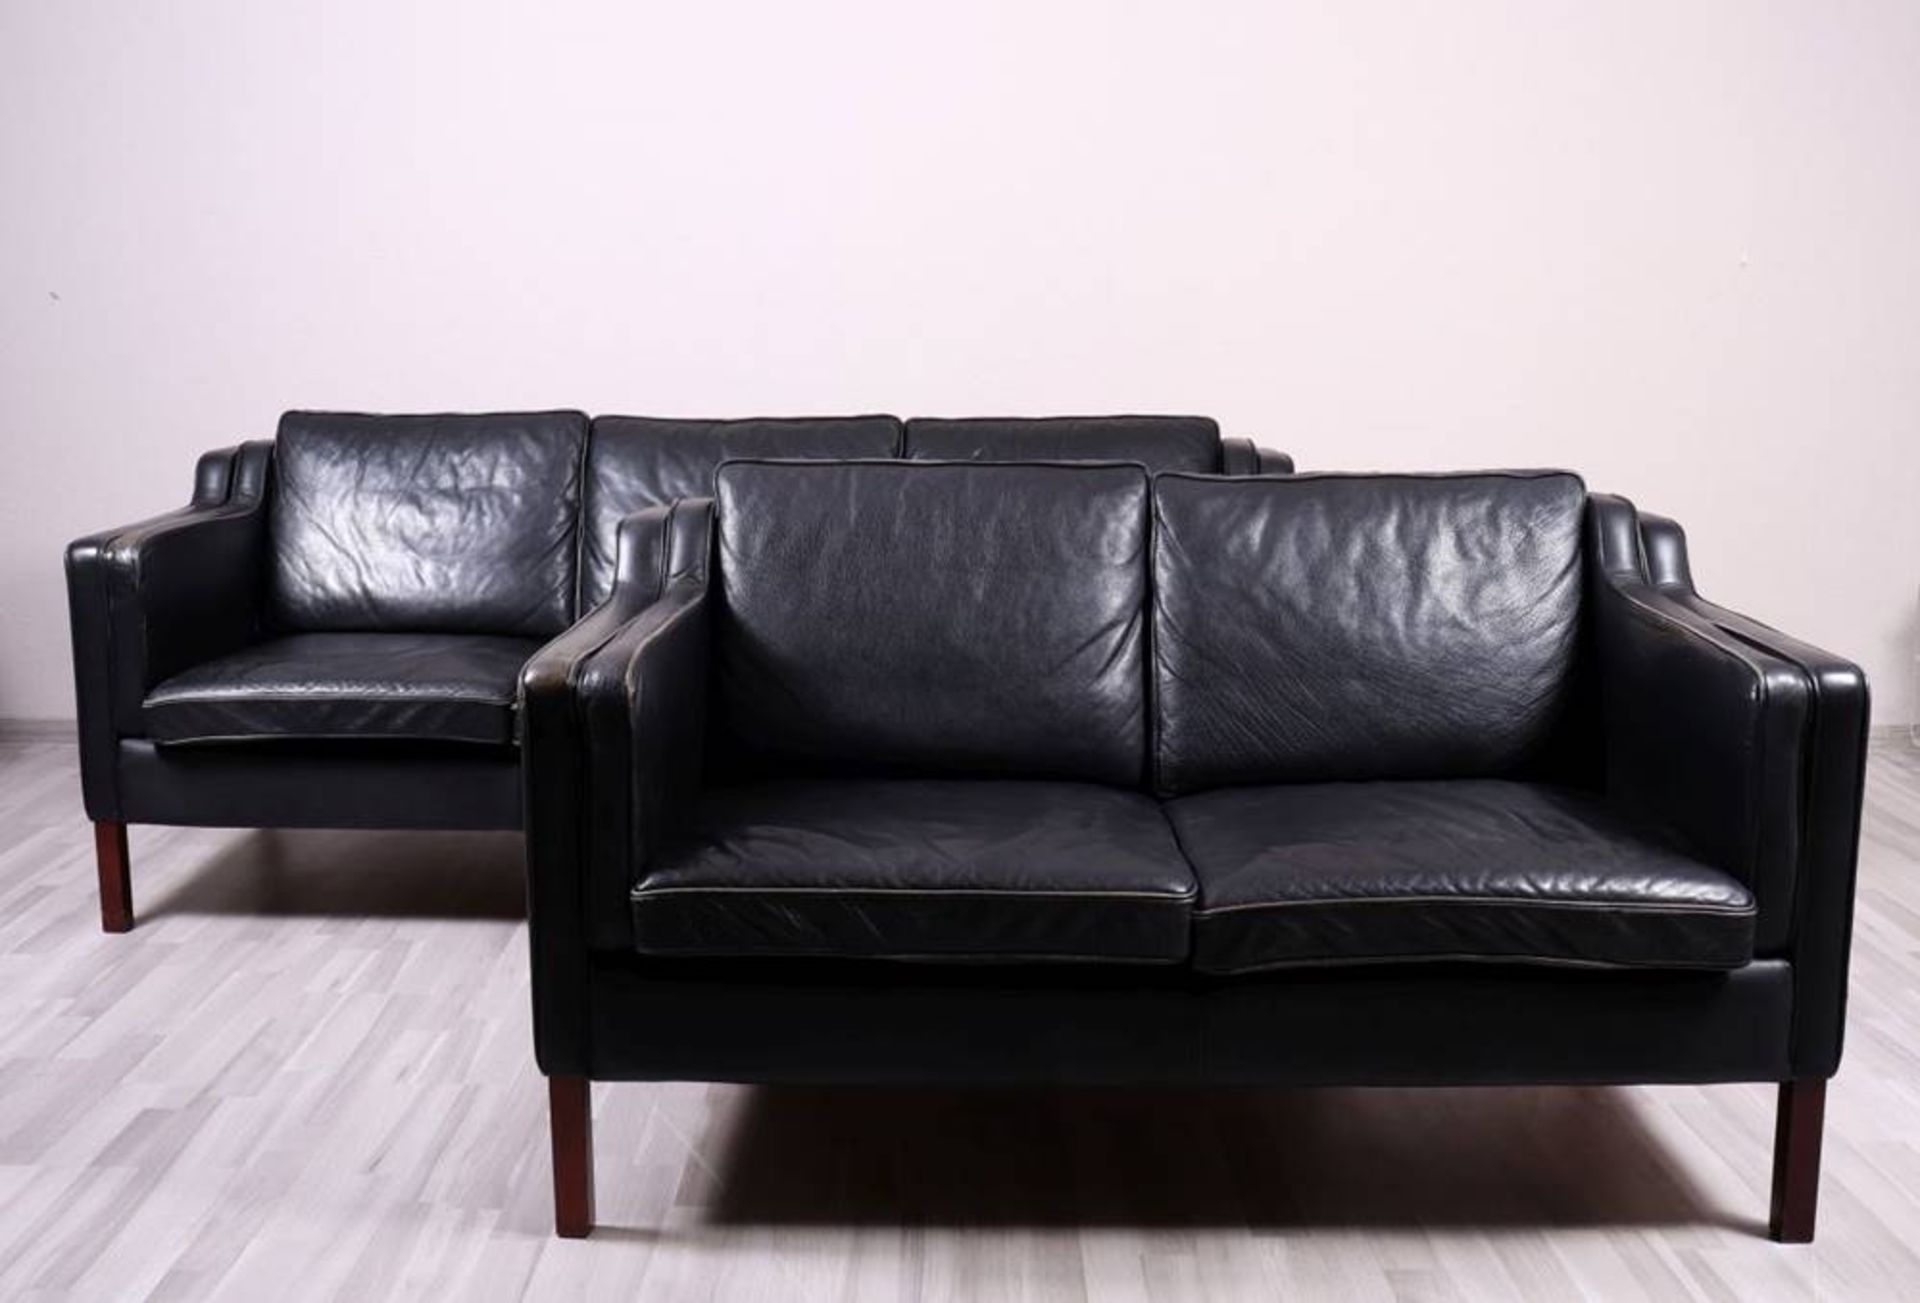 Sofa setStouby, Denmark, 20th C., model "Eva", 2 seater and 3 seater sofa, black leather upholstery,